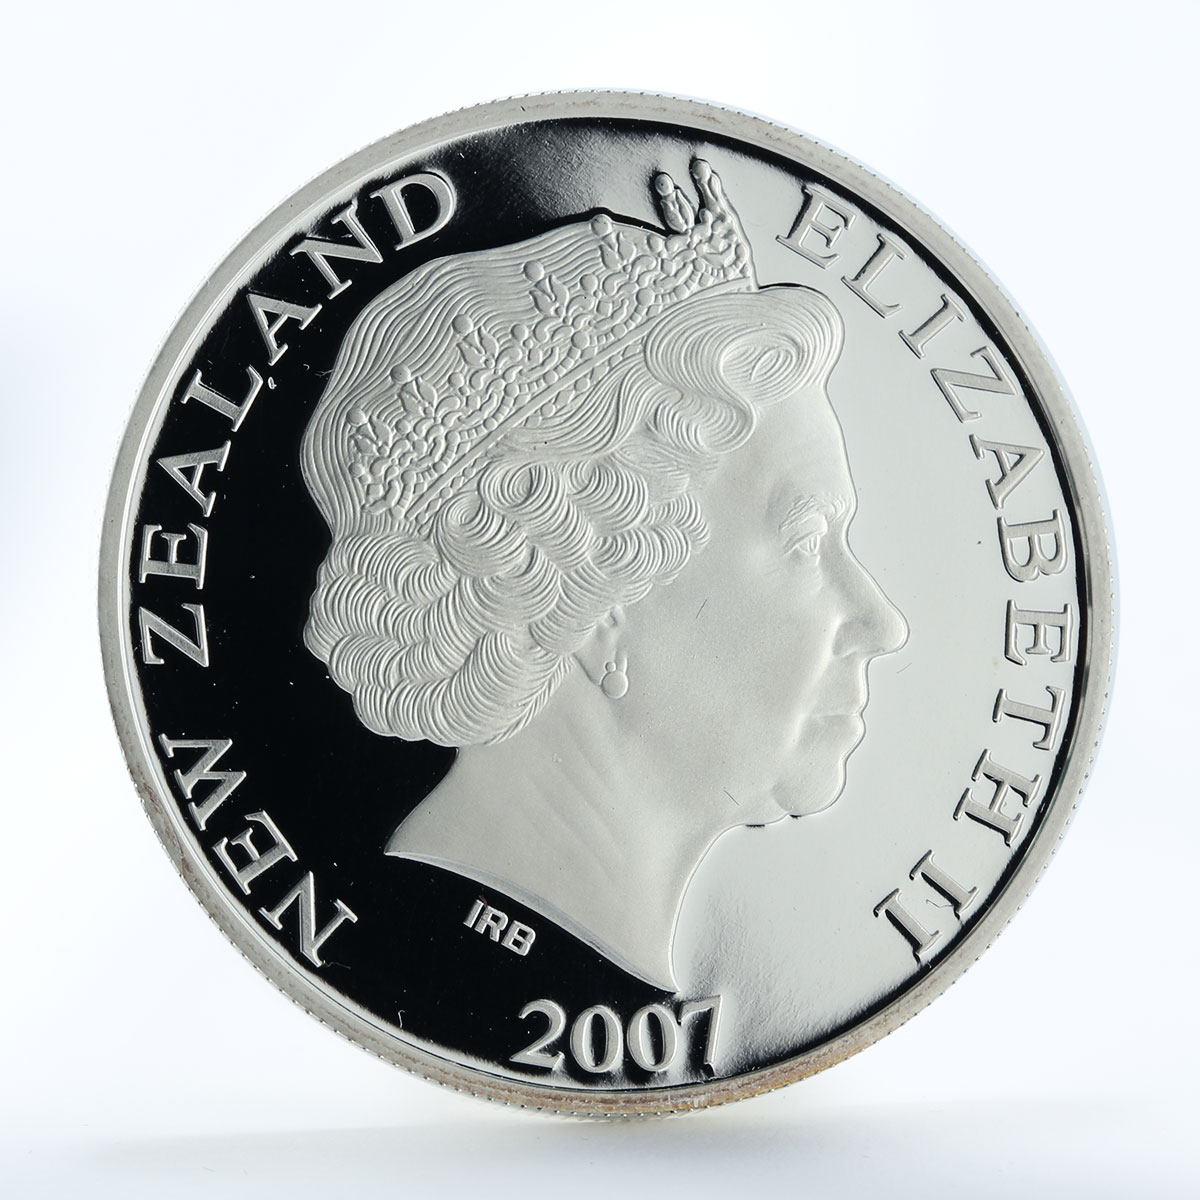 New Zealand 1 dollar Scott Base 1957-2007 proof silver coin 2007